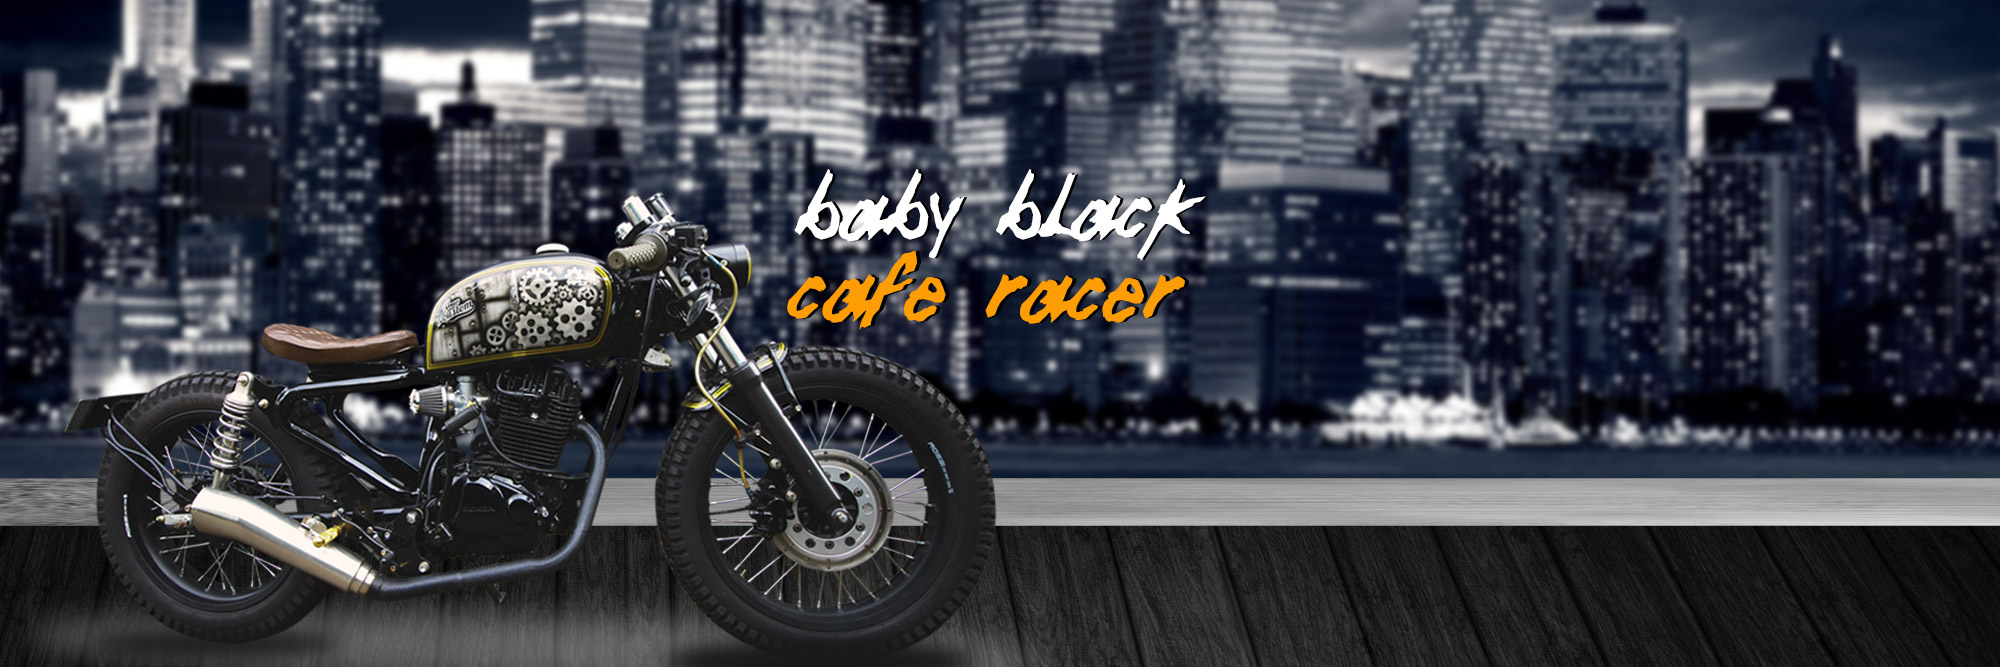 Modifikasi Megapro Baby Black Cafe Racer